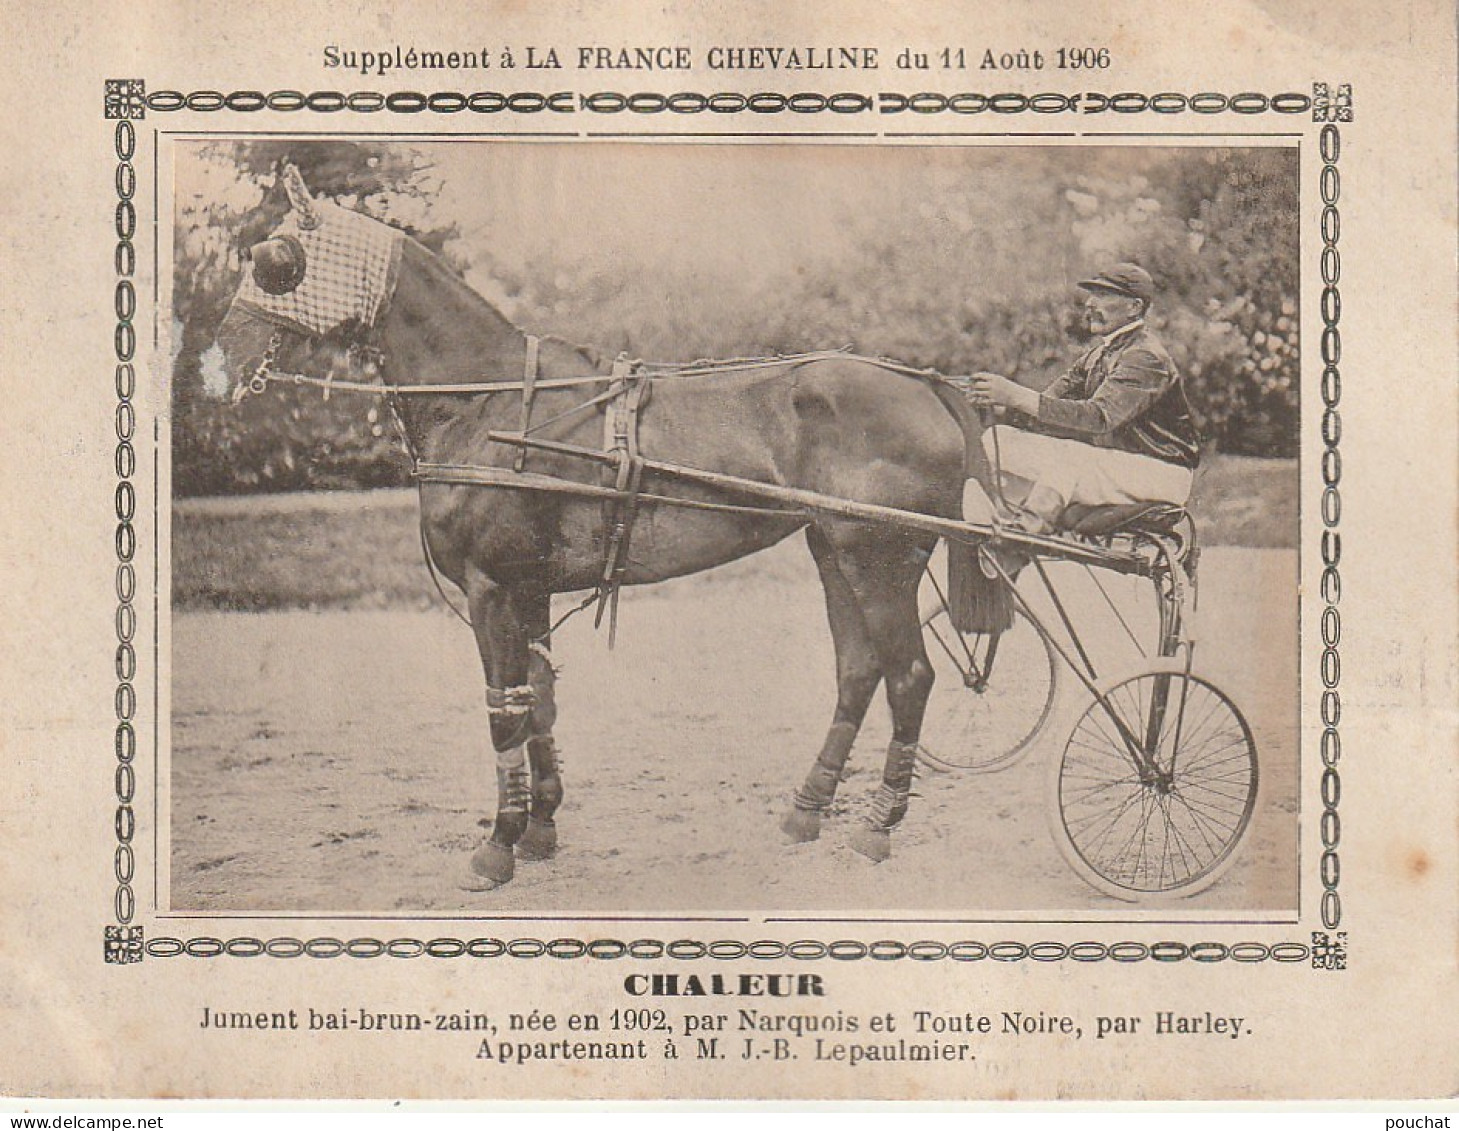 AA+ - " CHALEUR " - JUMENT APPARTENANT A  M. J. B. LEPAULMIER - SUPPLEMENT " FRANCE CHEVALINE " ( 11 AOUT 1906 ) - SULKY - Horse Show